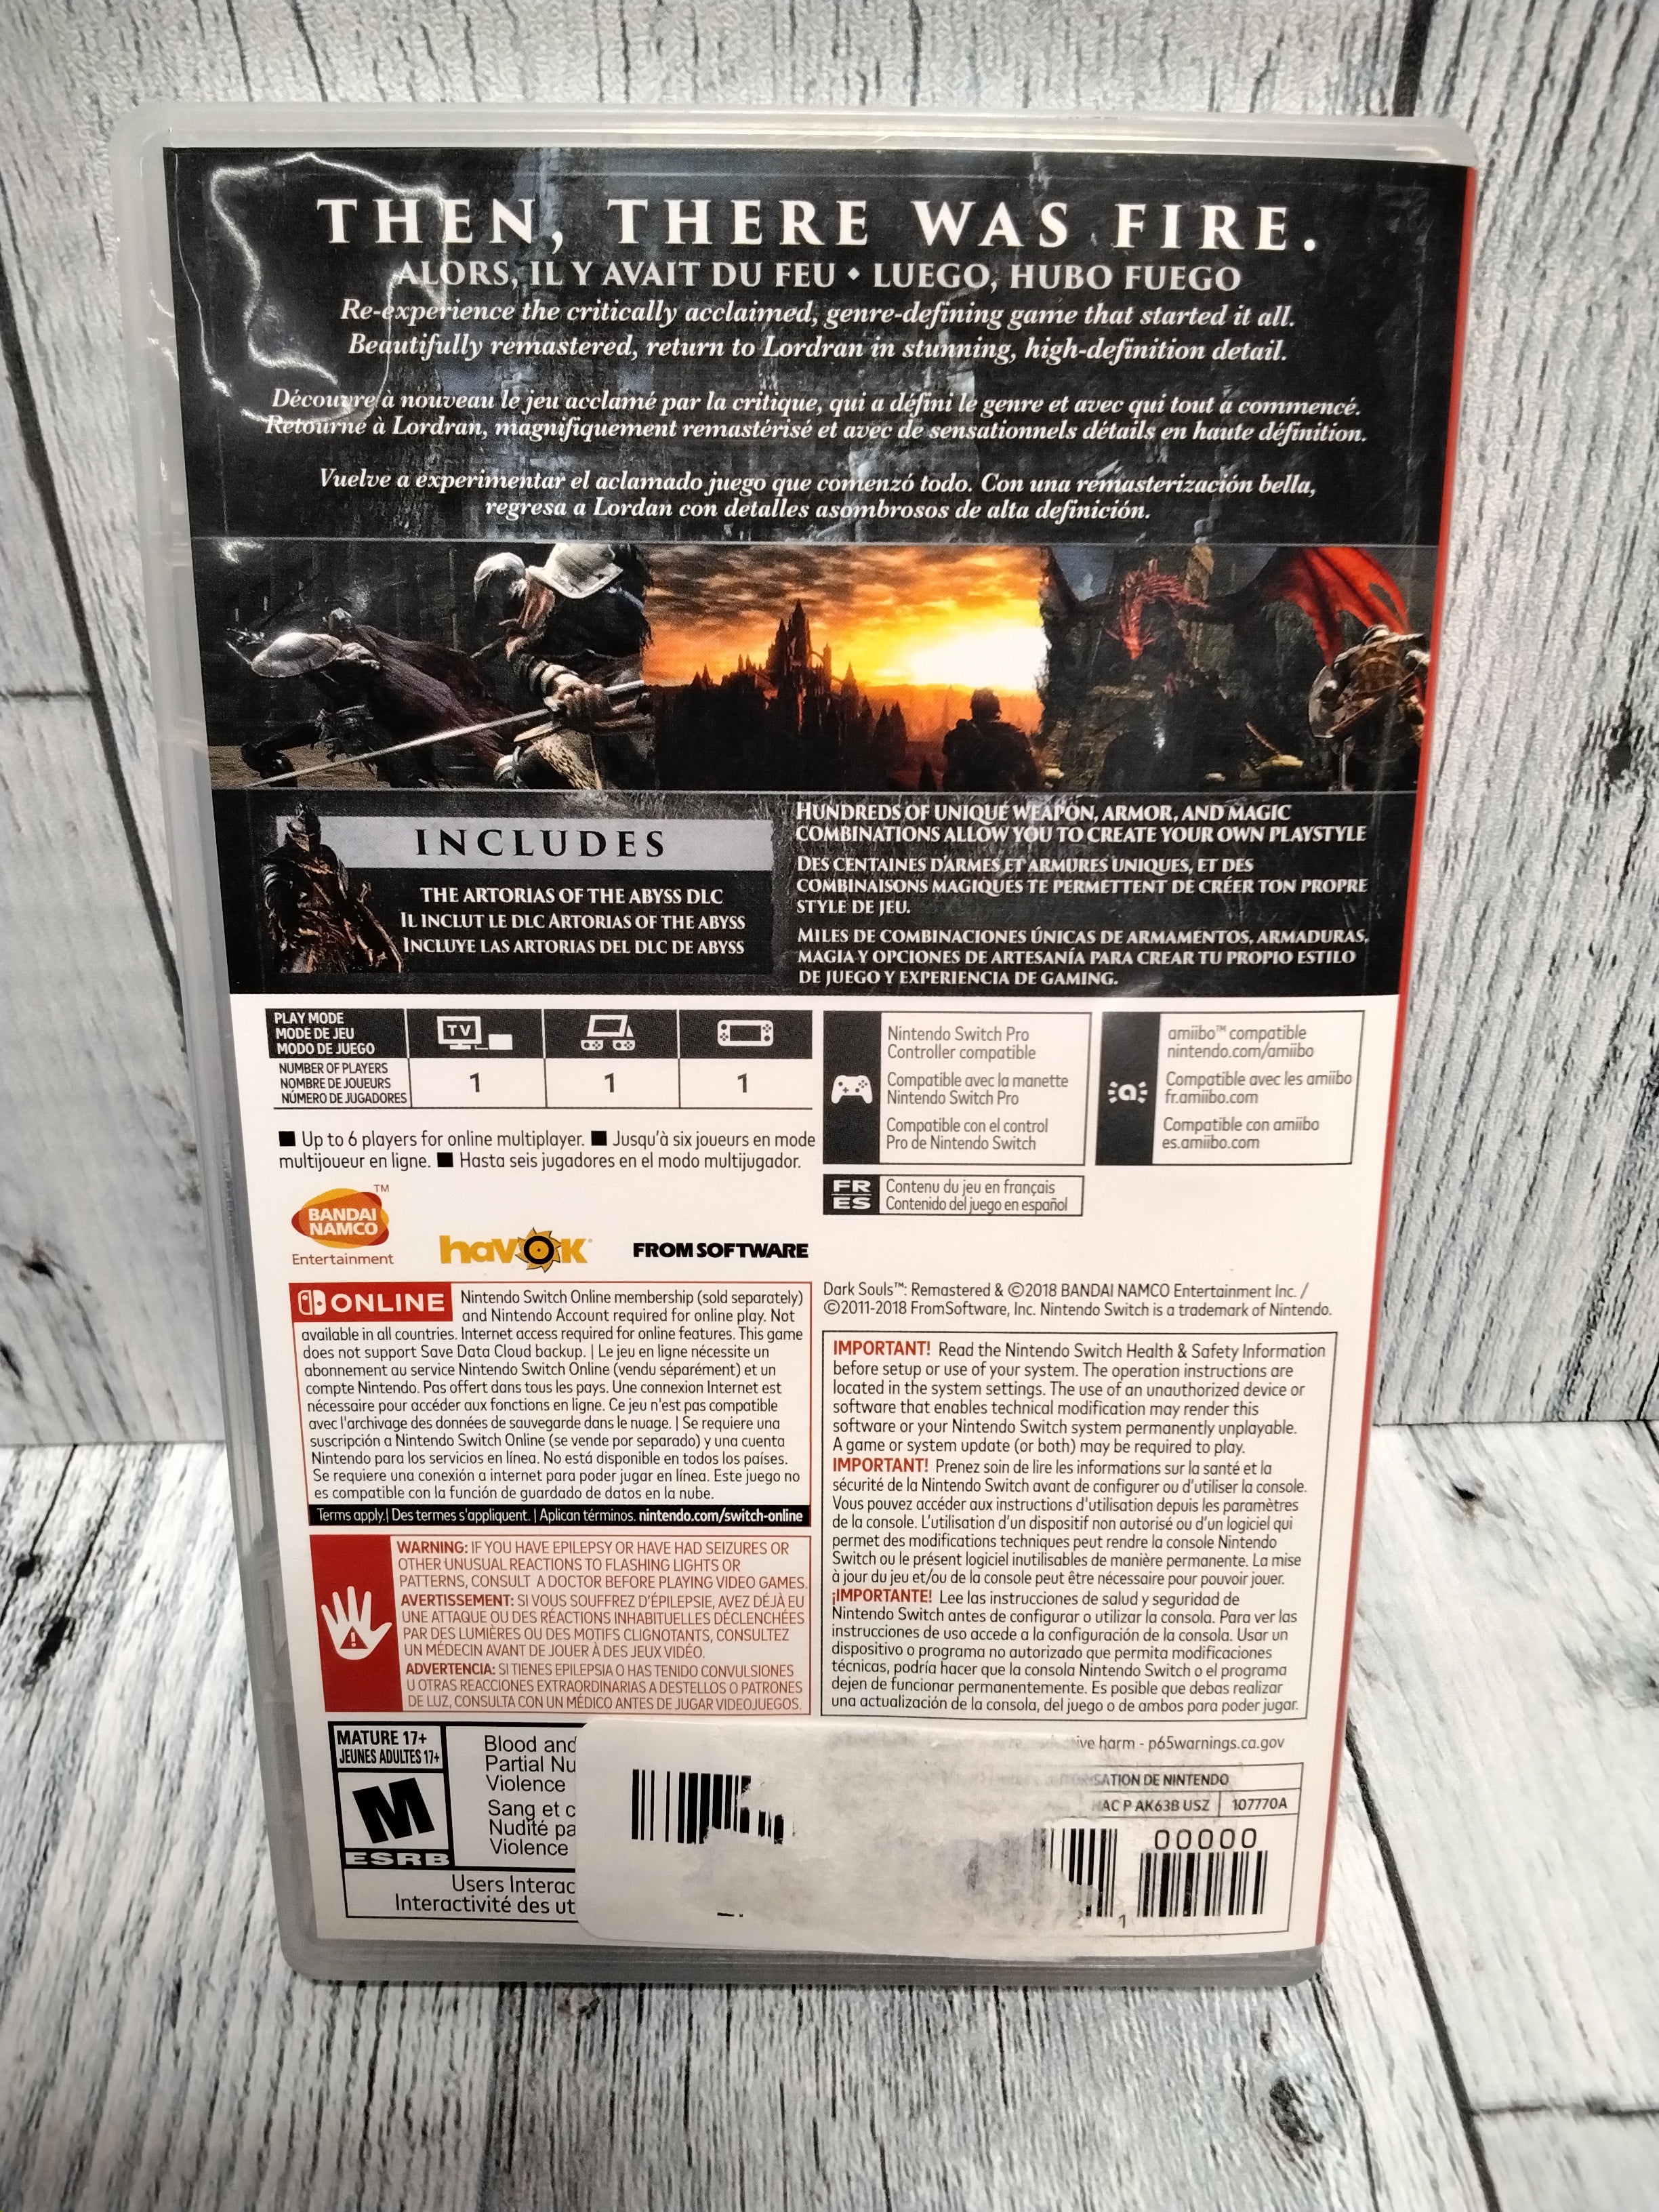 Dark Souls: Remastered - Nintendo Switch (7781132370158)